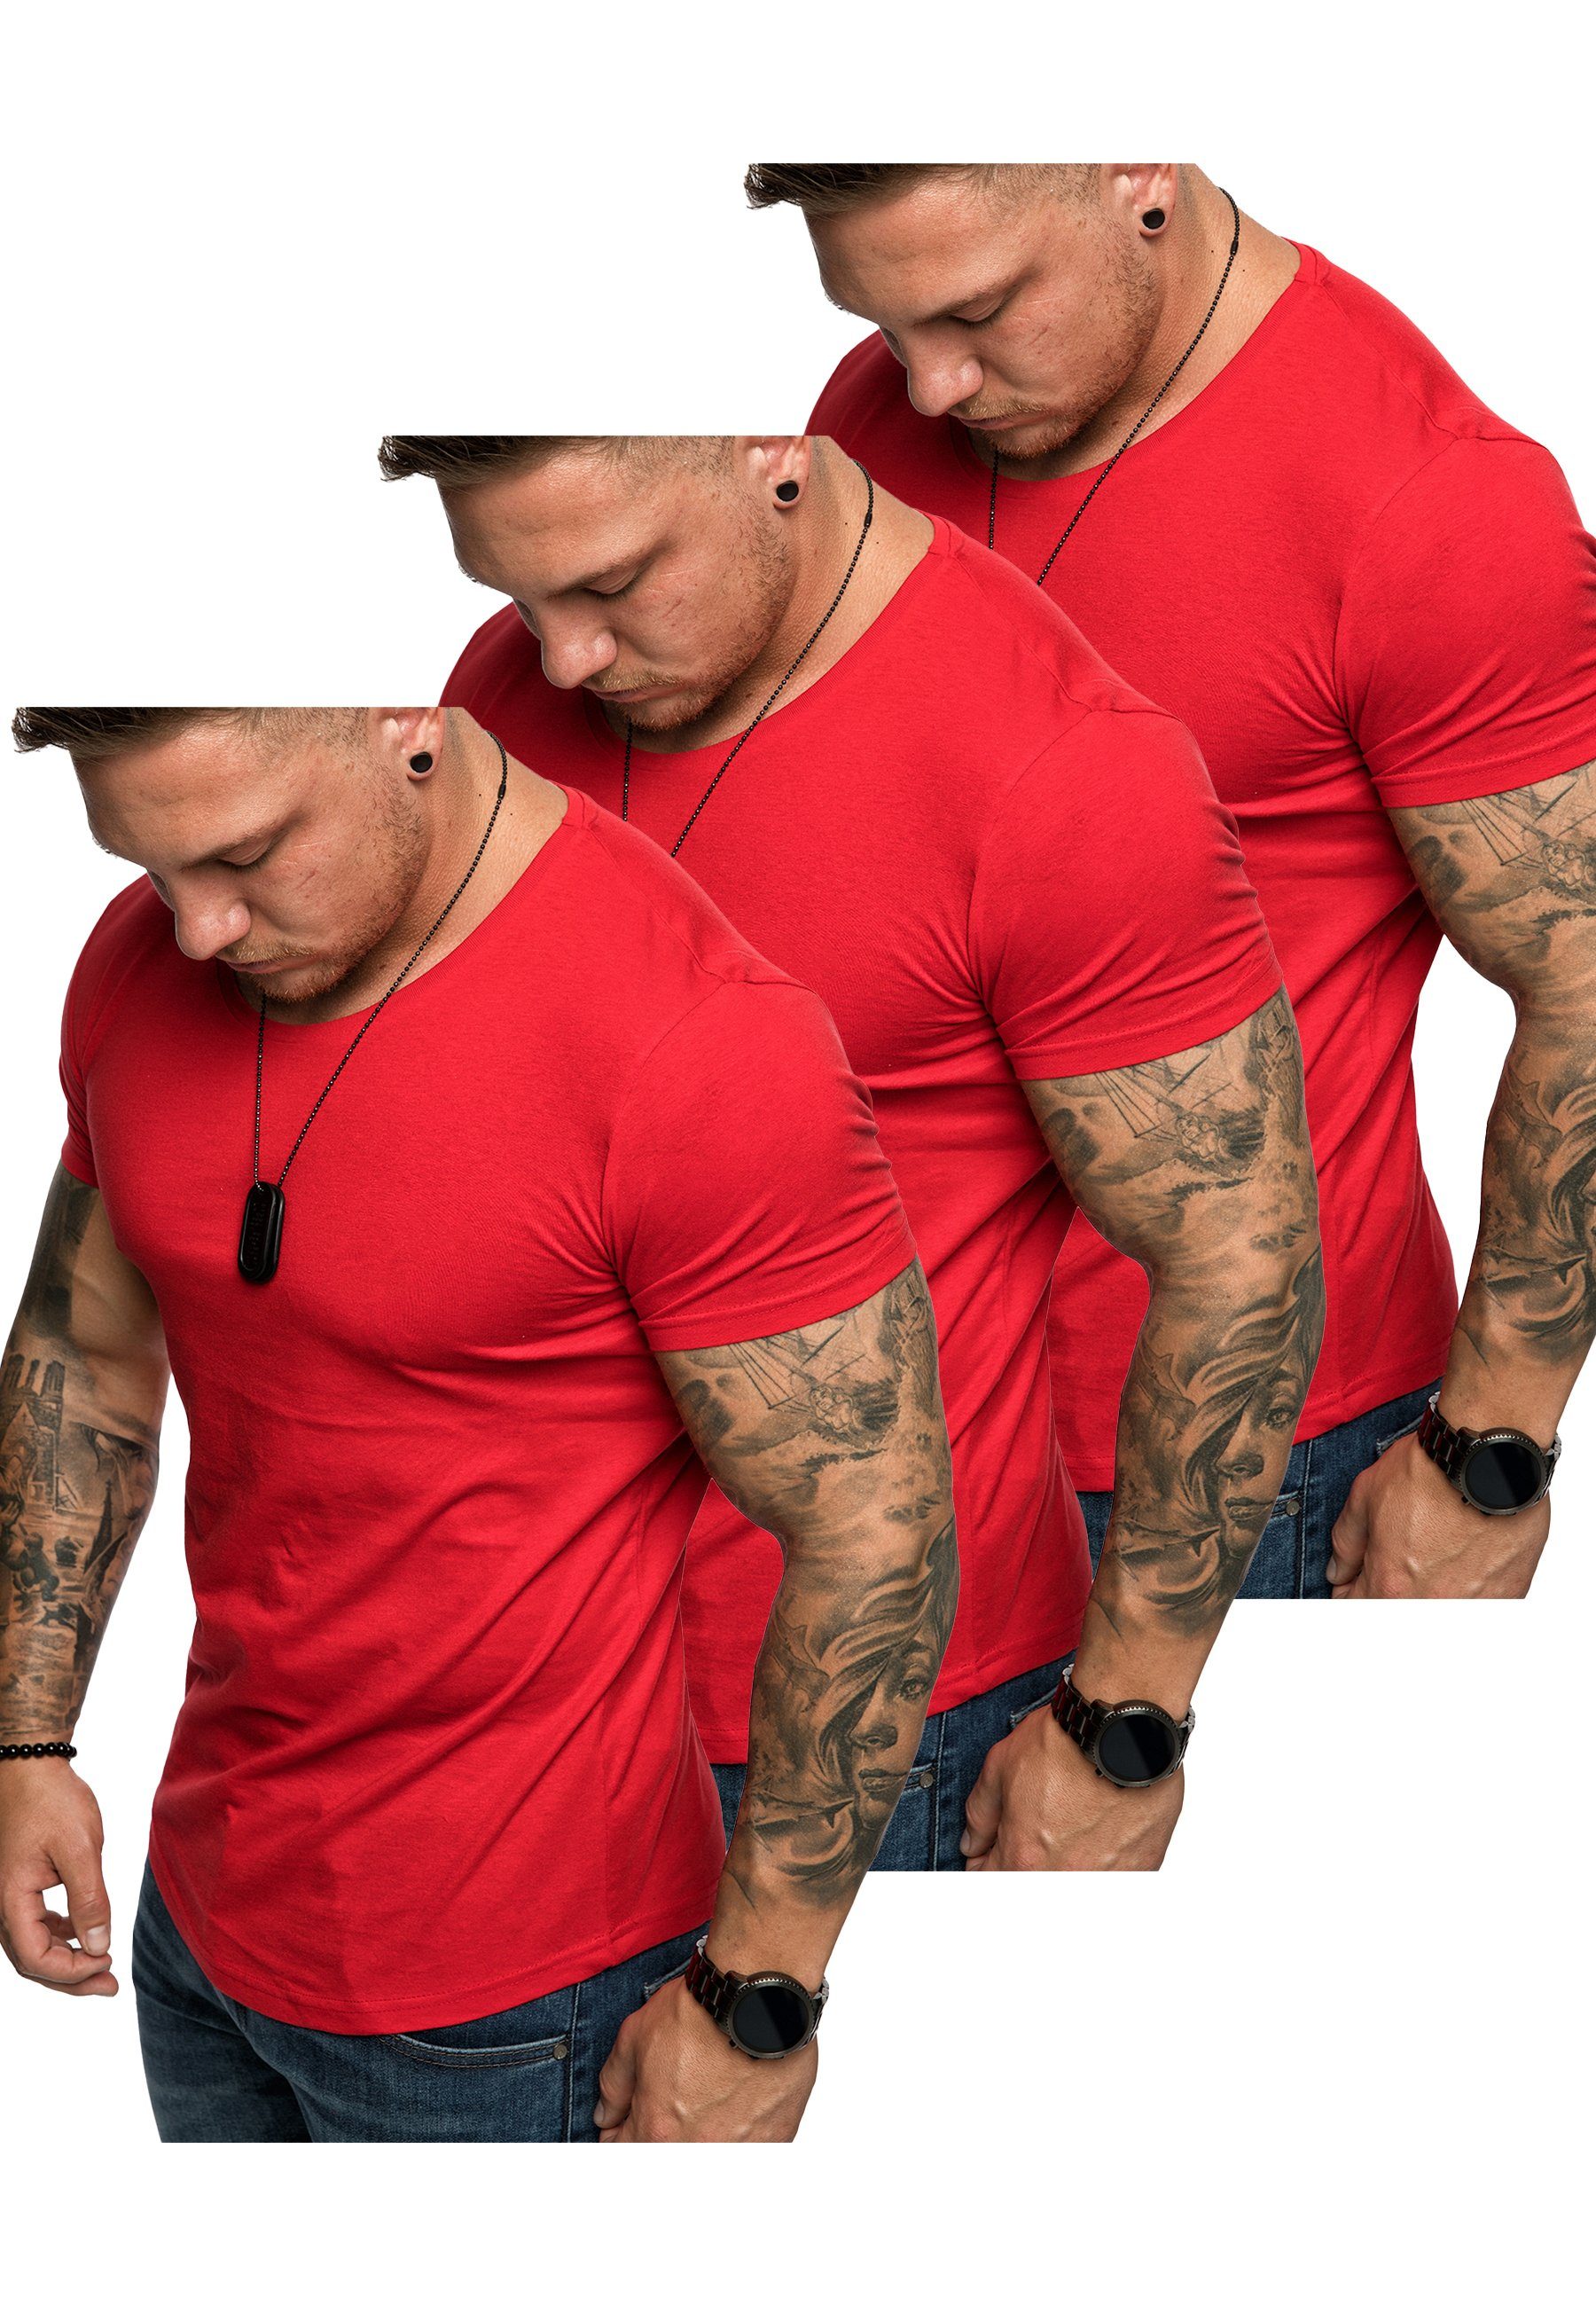 Amaci&Sons T-Shirt 3. TACOMA 3er-Pack T-Shirts (3er-Pack) Herren Basic Oversize T-Shirt mit Rundhalsausschnitt (3x Rot)